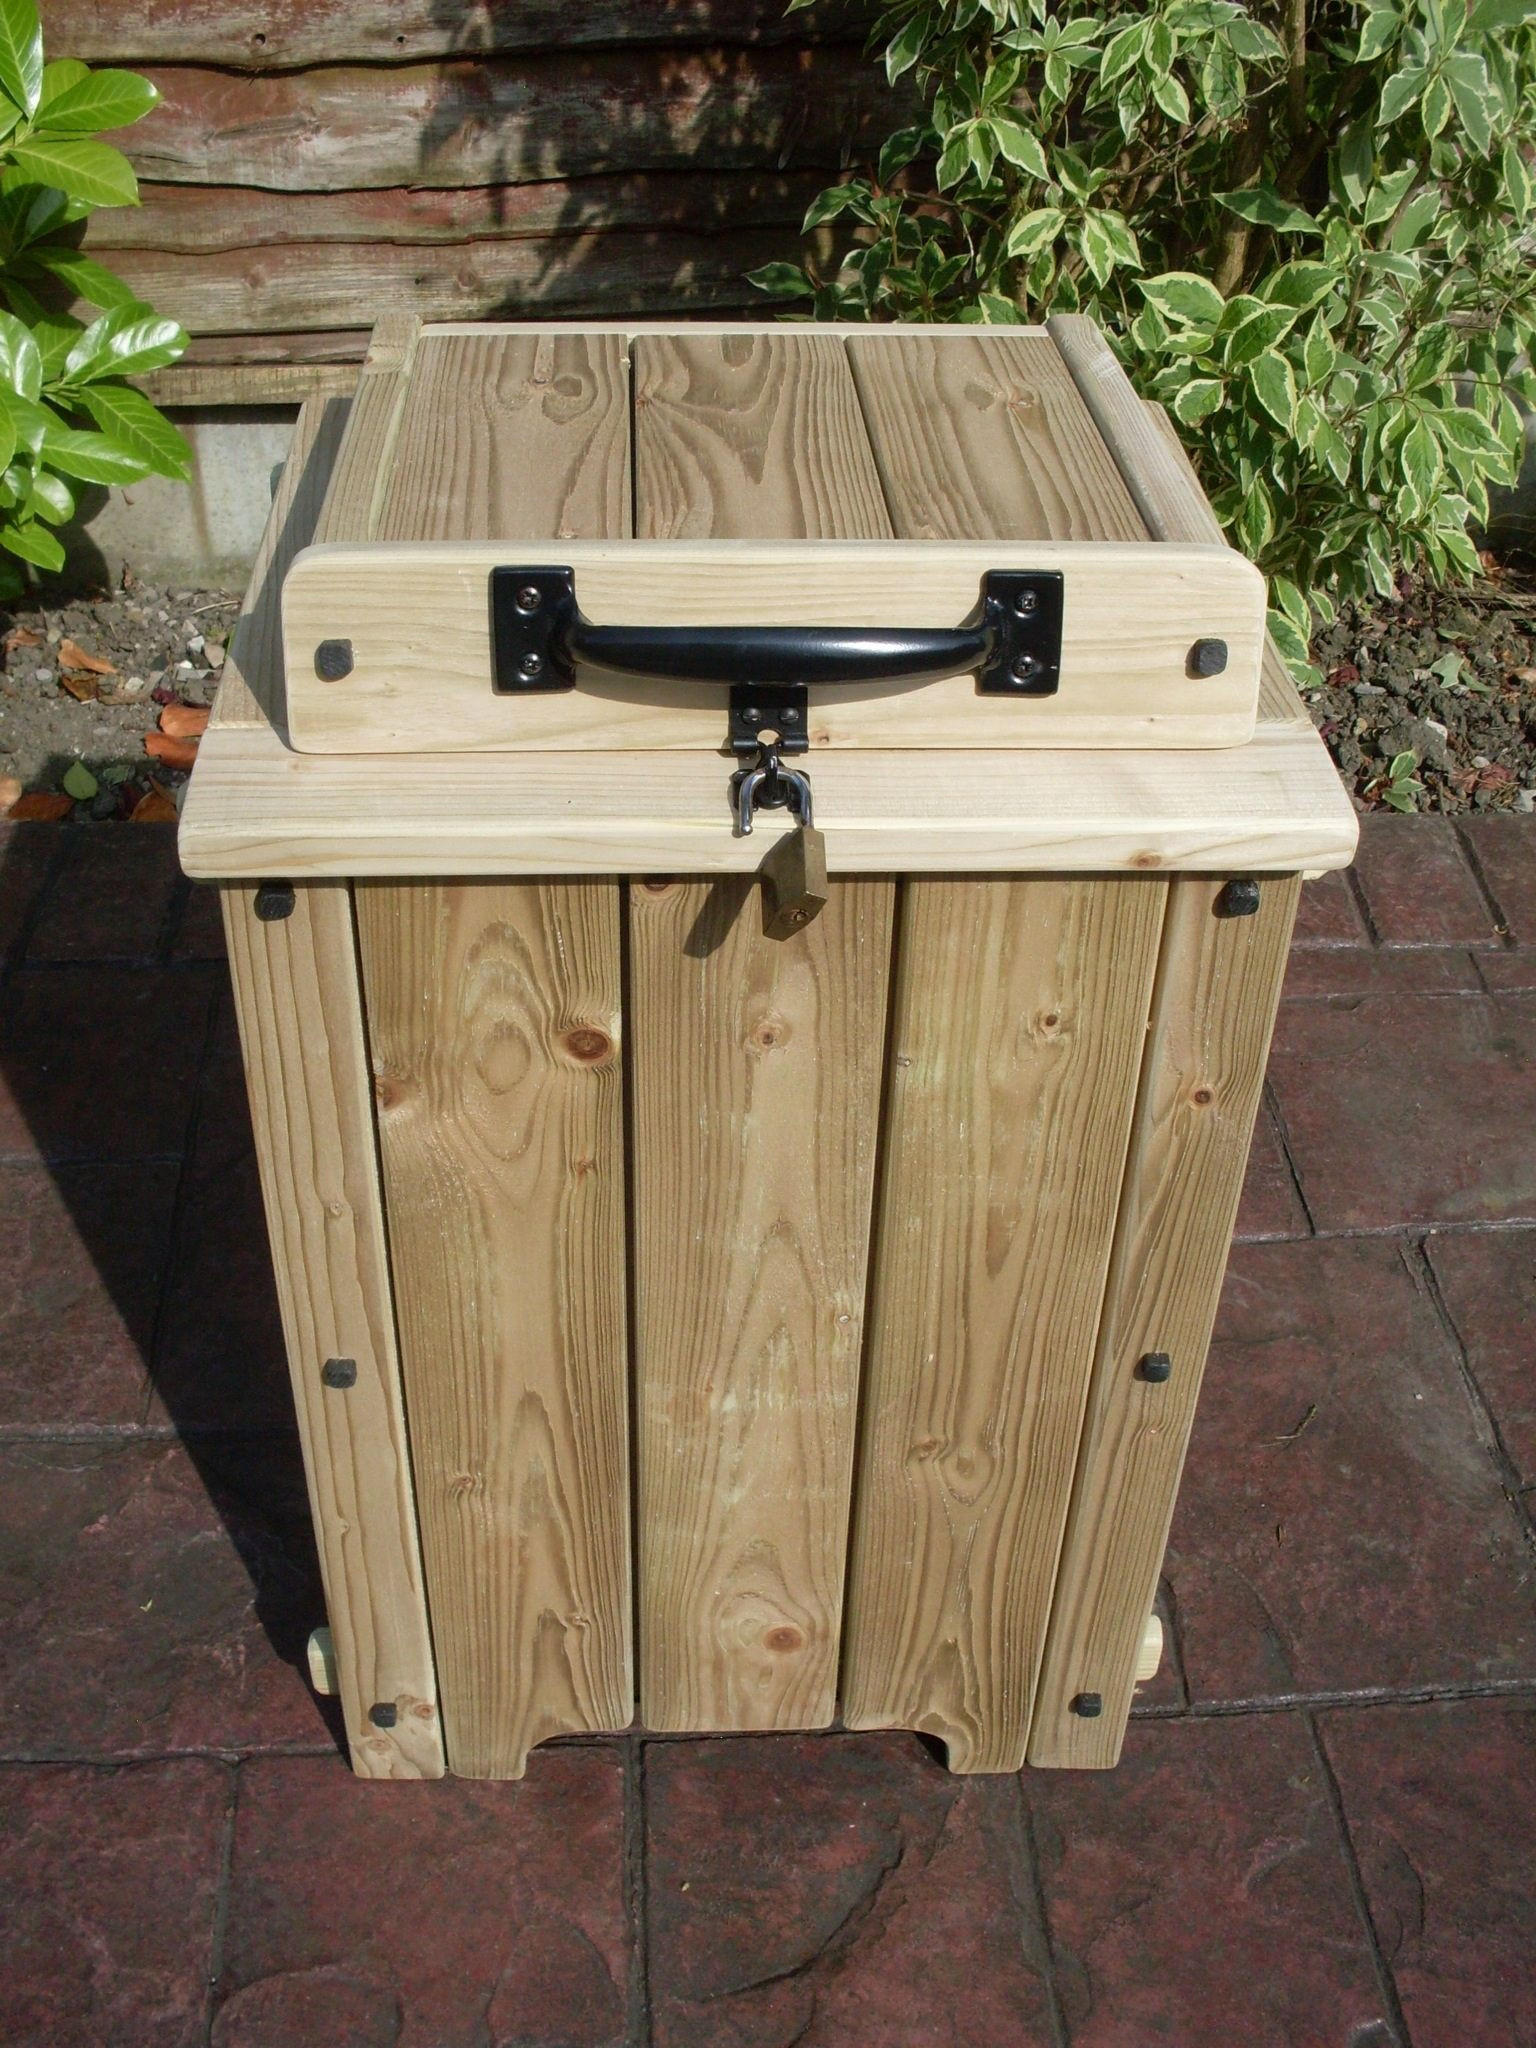 Best ideas about DIY Parcel Drop Box
. Save or Pin Parcel drop box KH Garden furniture Sturdy Now.